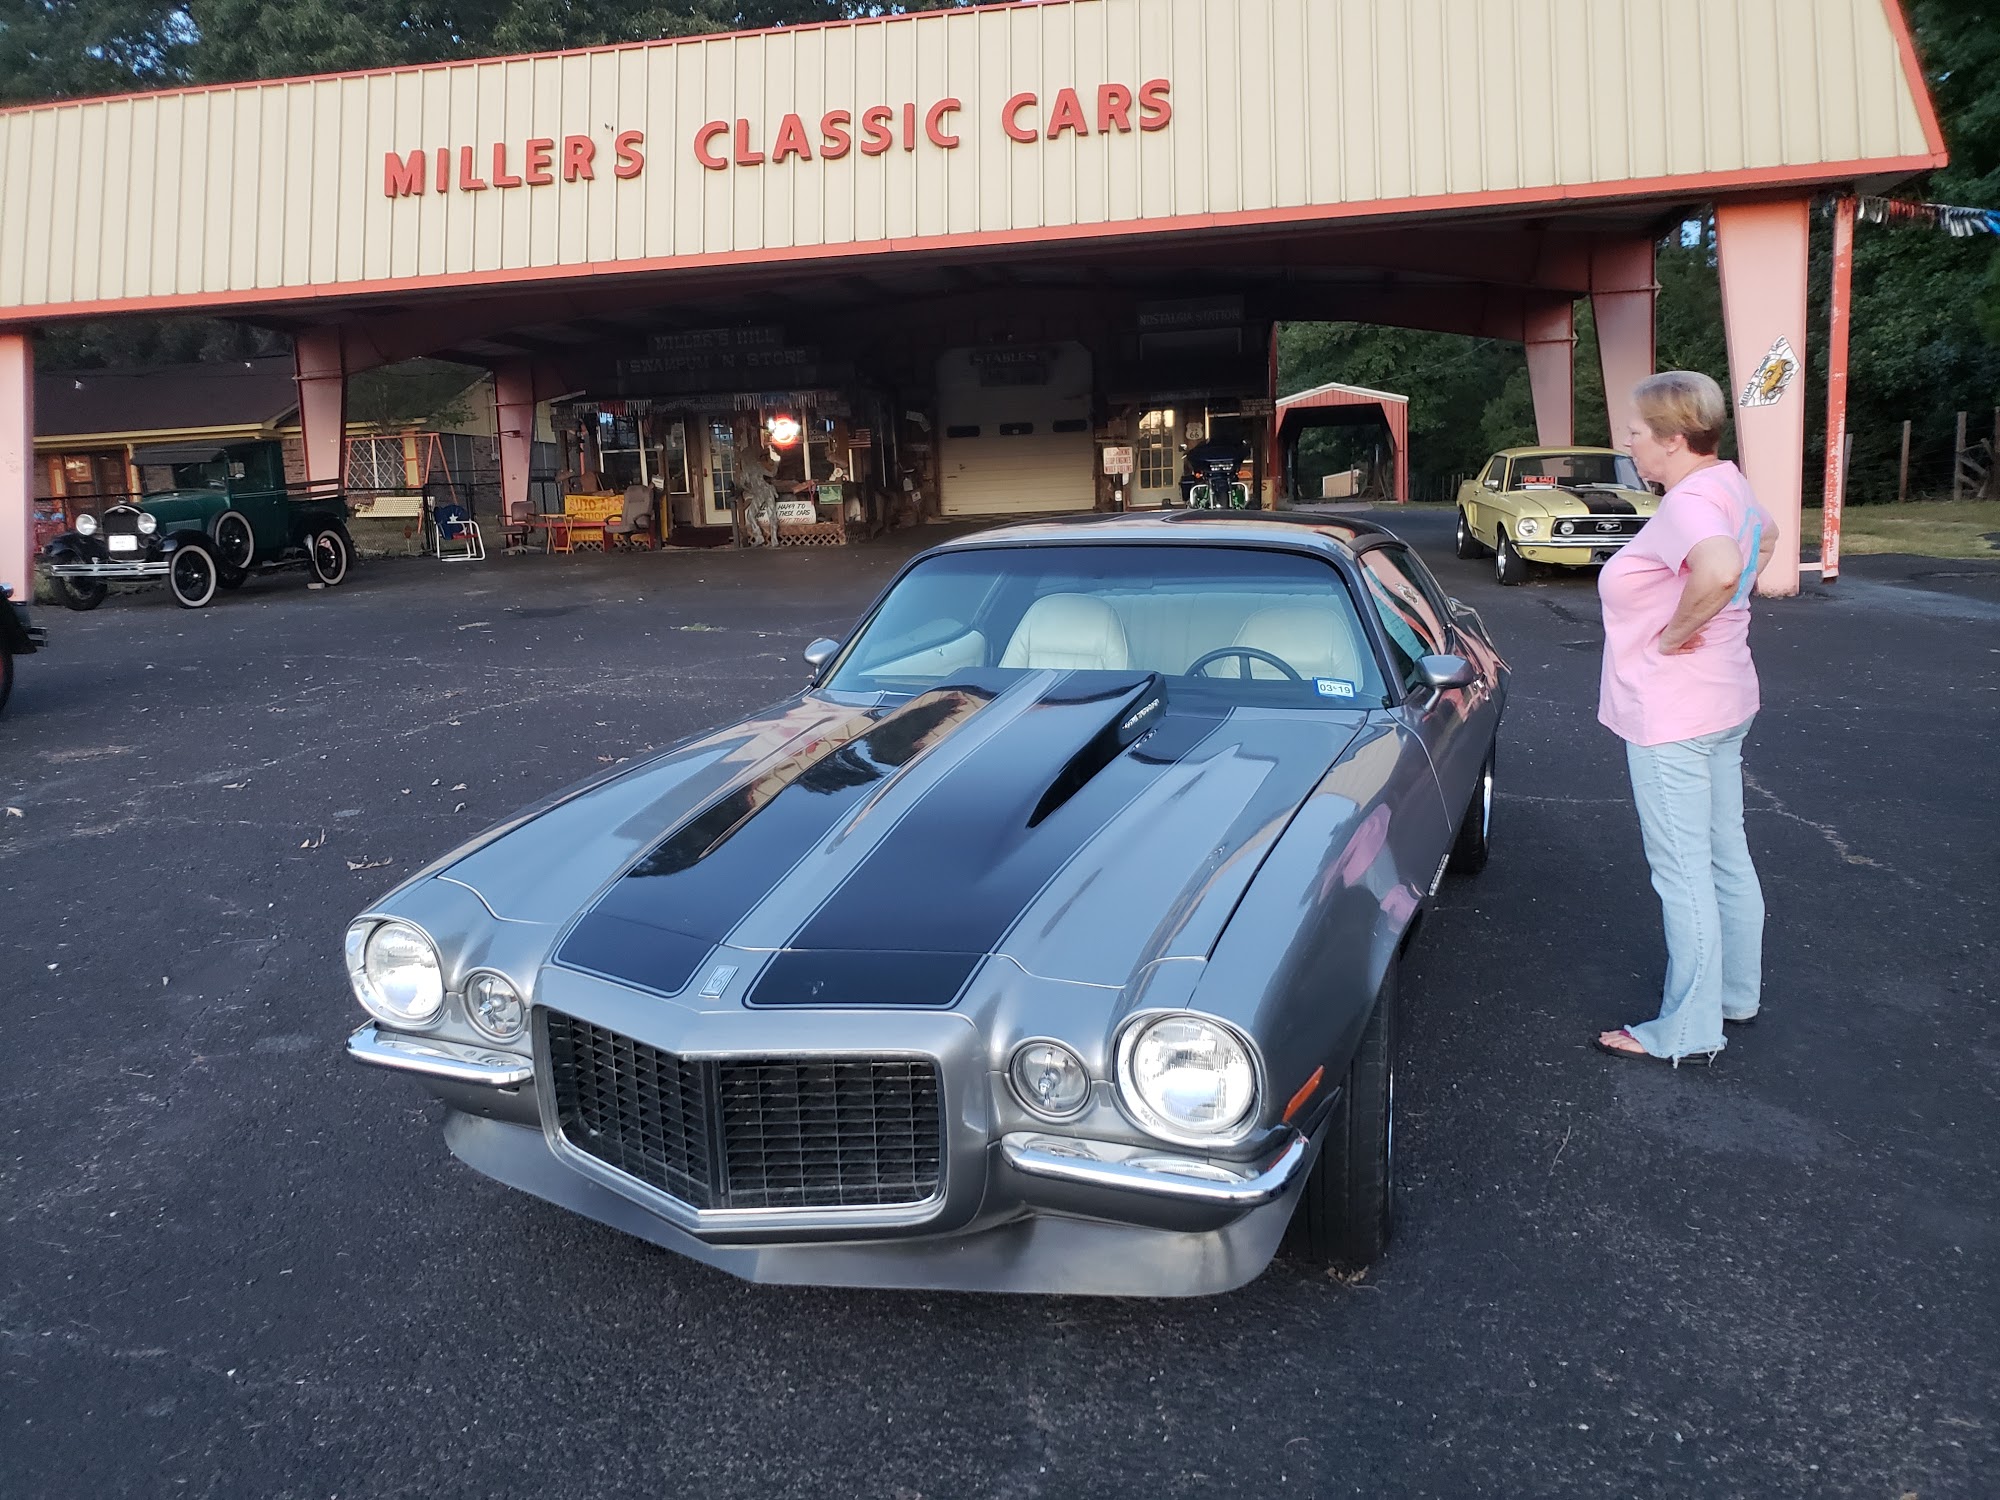 Miller's Classic Cars